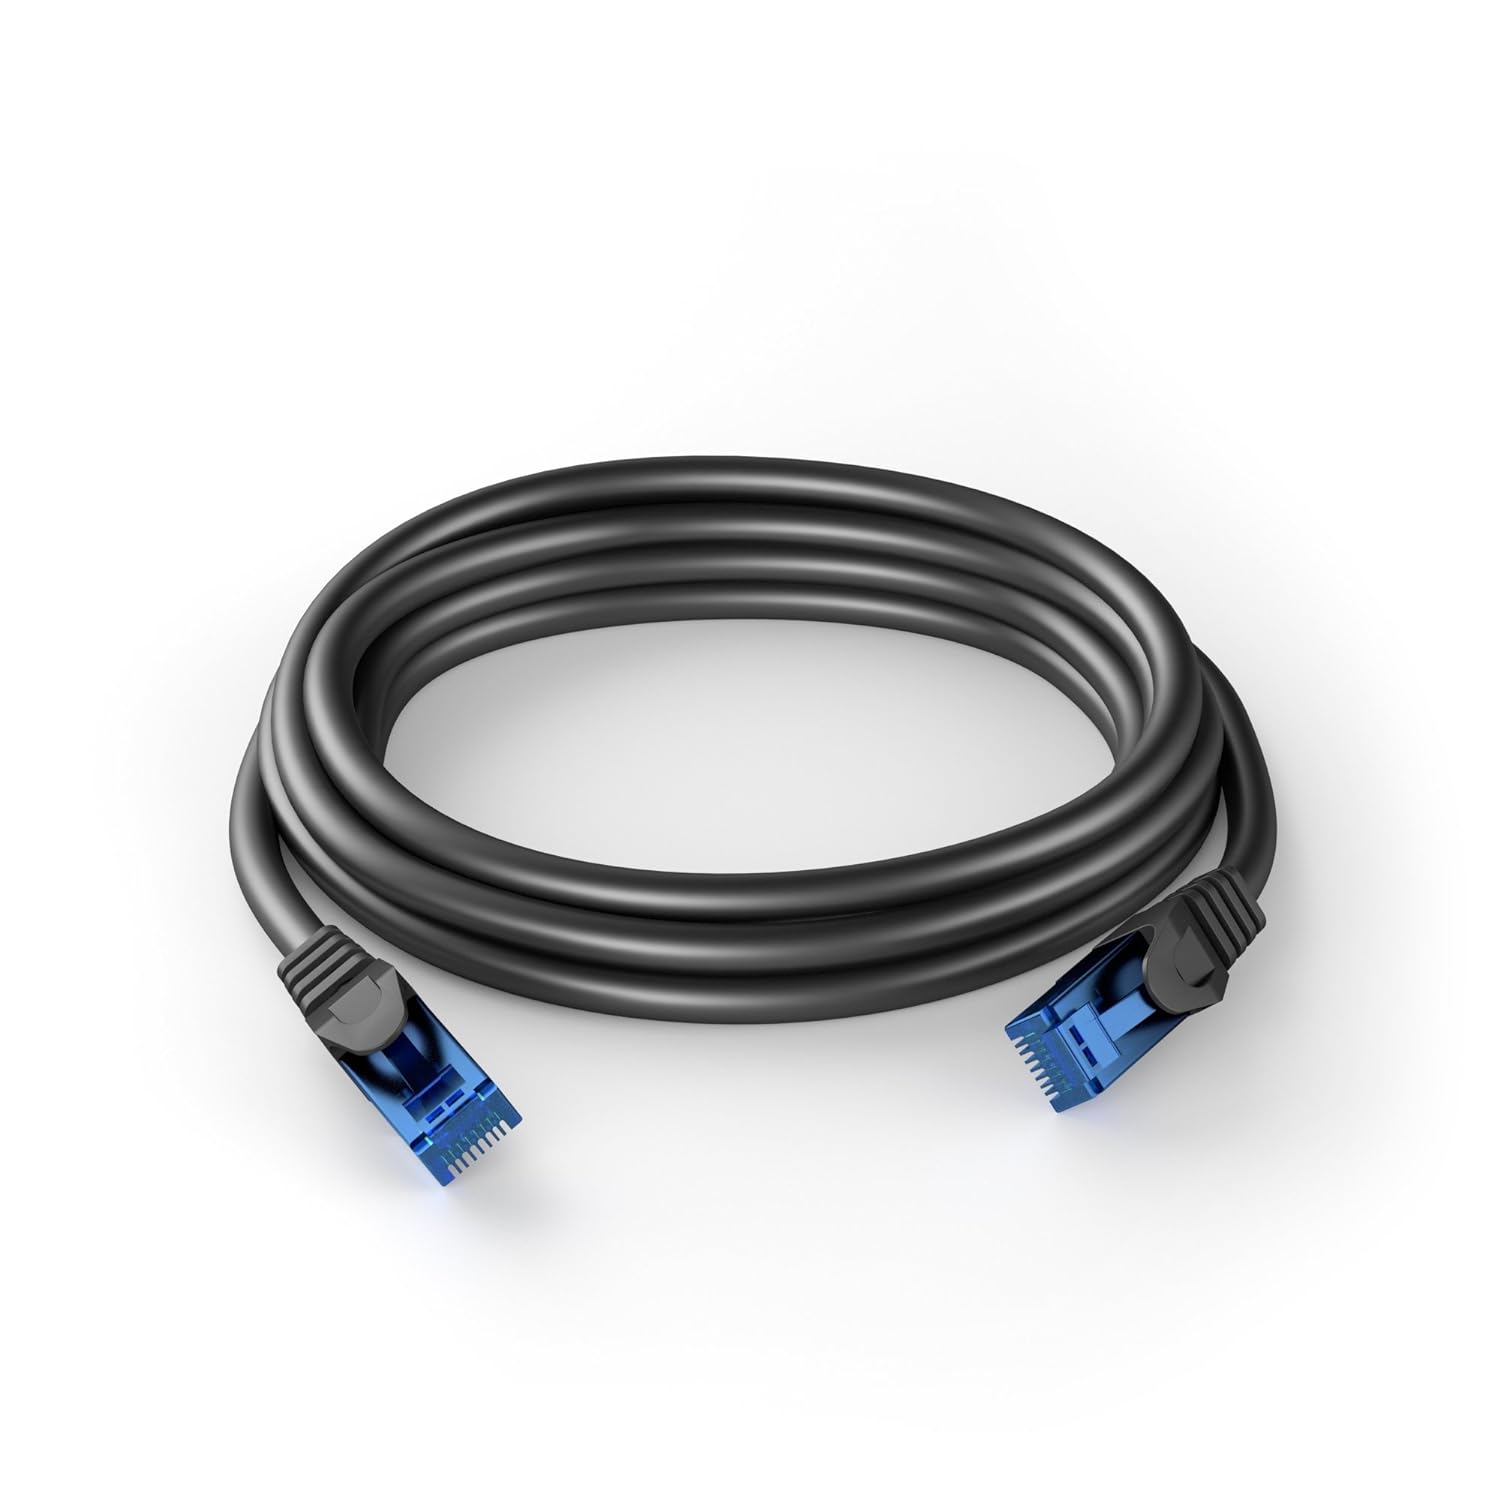 KabelDirekt 75 feet Cat6 Ethernet Gigabit LAN mainstream network cable (RJ45) / backwards compatible (Cat5, Cat5e) - TOP Series